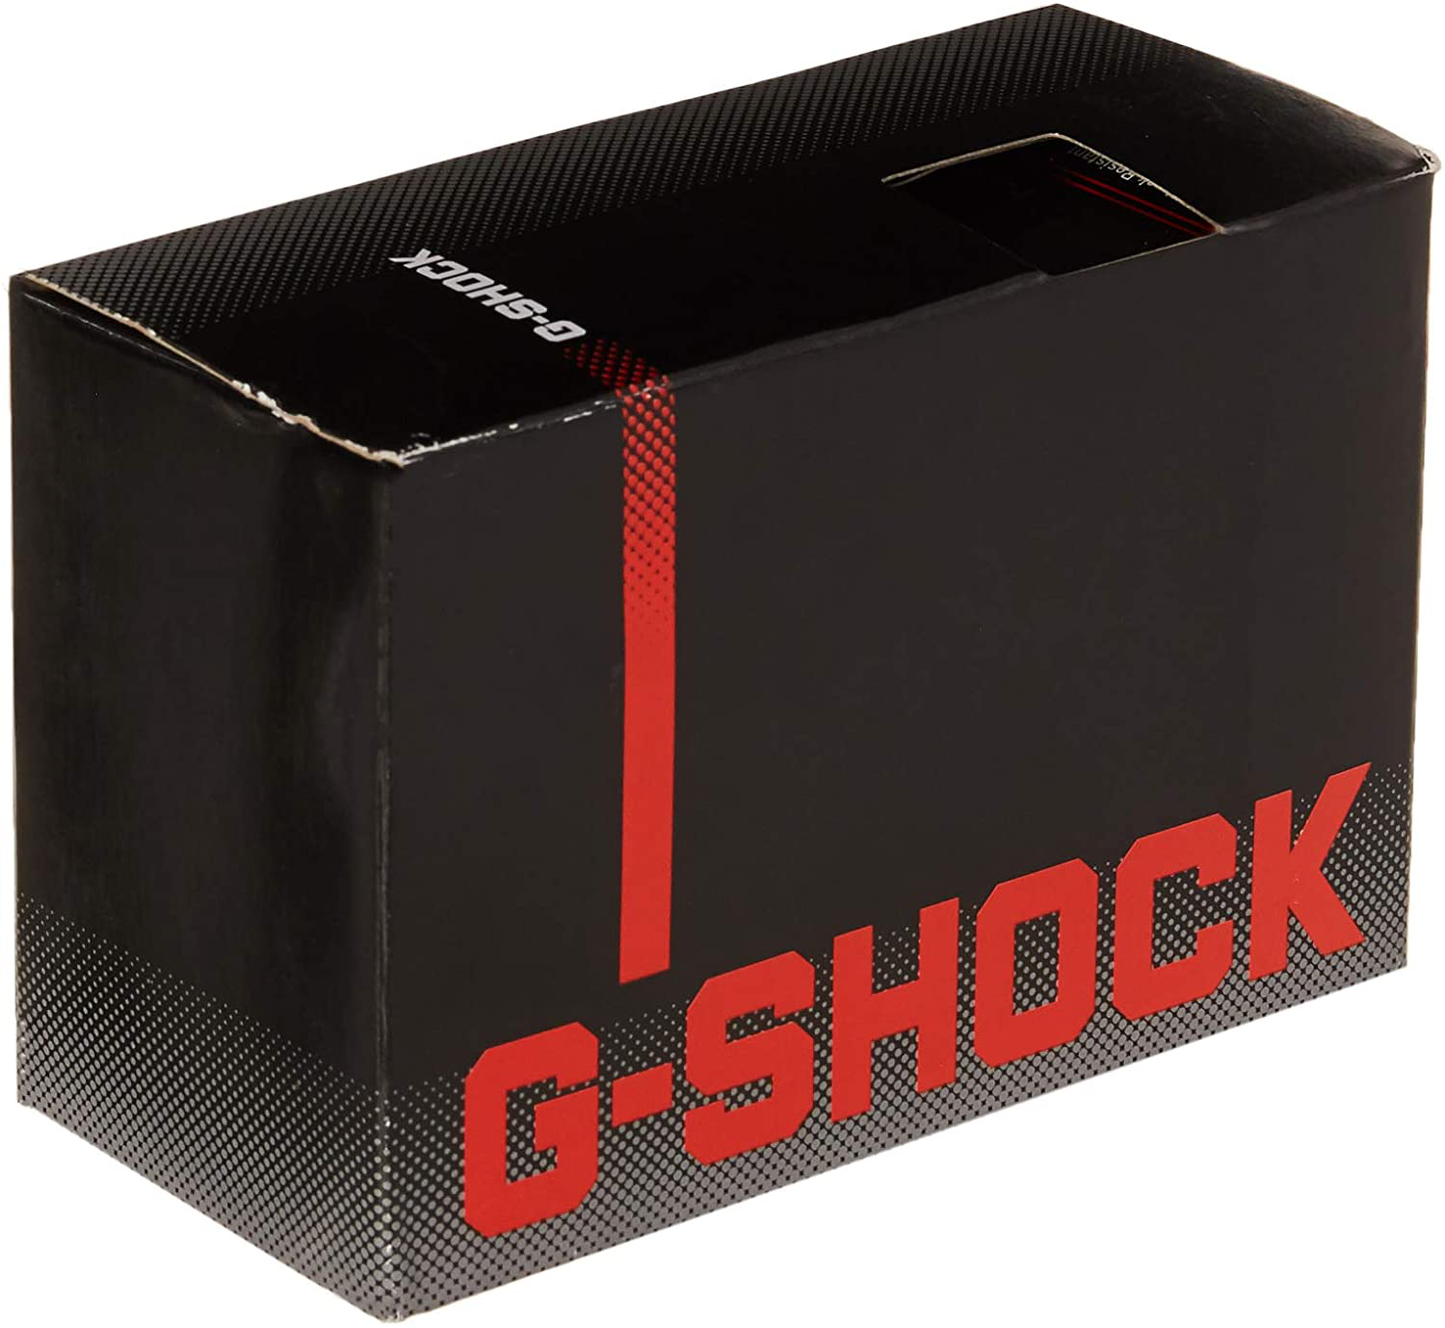 Casio G-Shock Digital Sport Black Men's Watch DW6900-1V